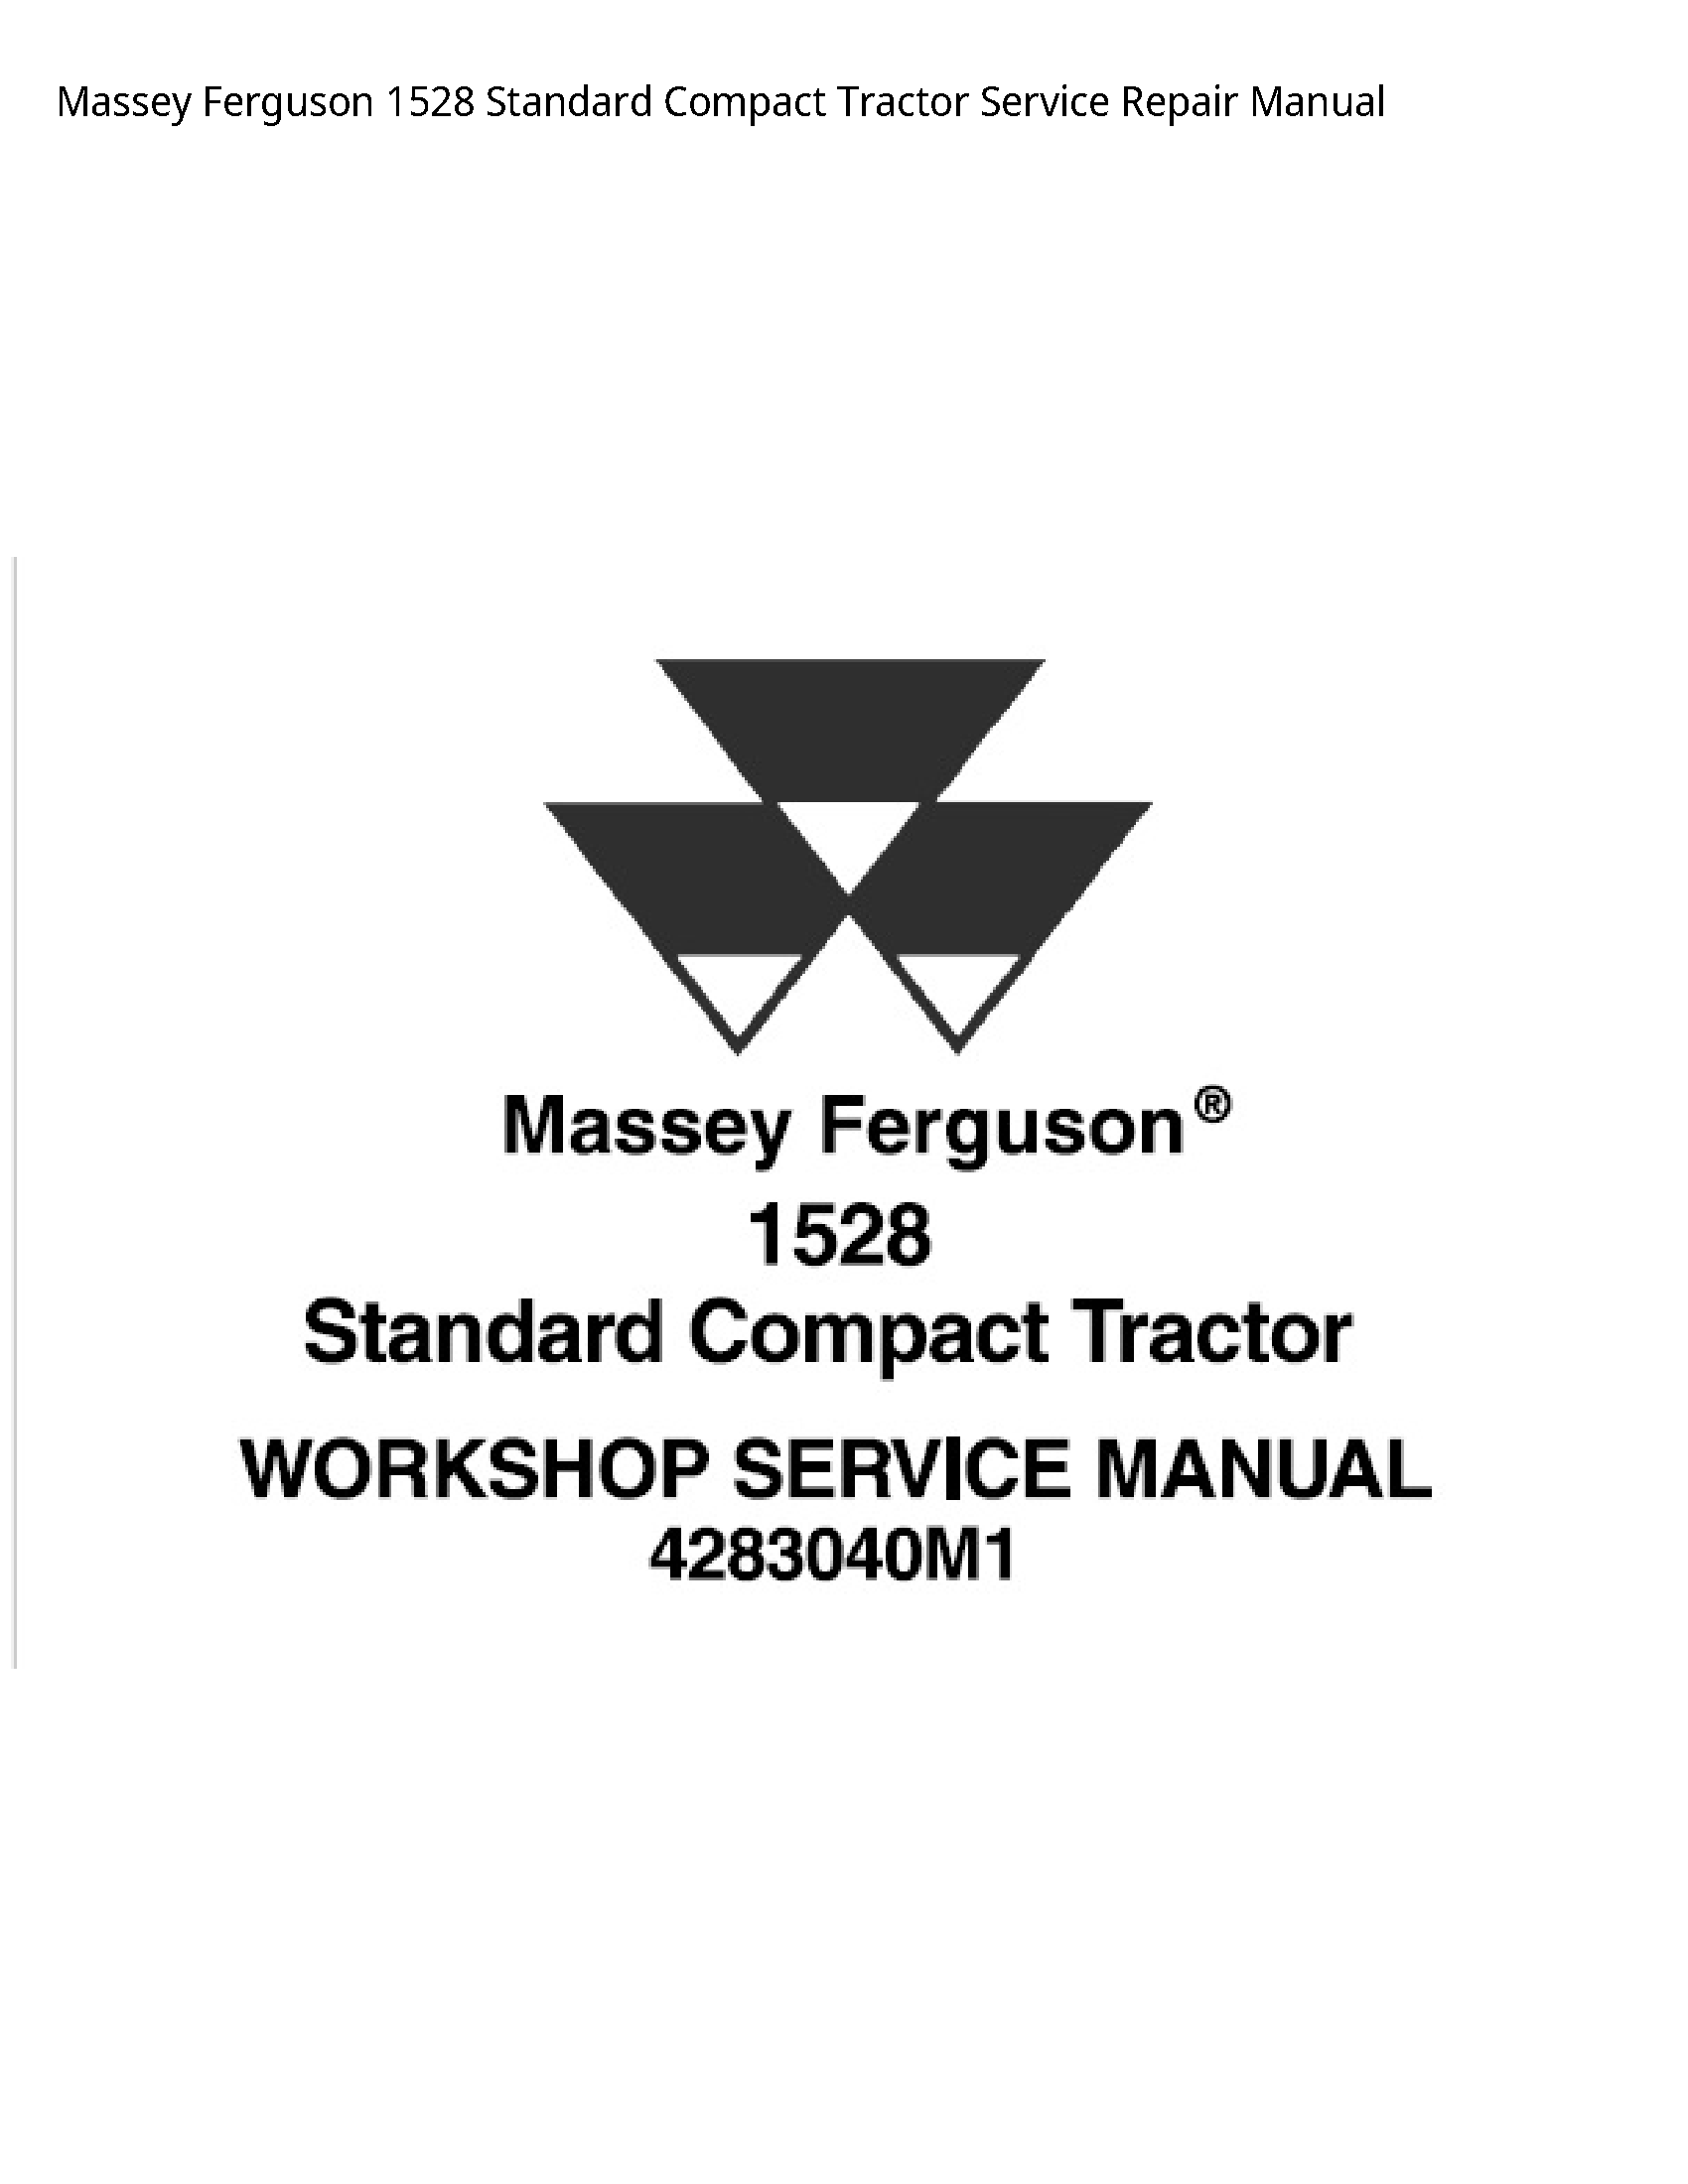 Massey Ferguson 1528 Standard Compact Tractor manual